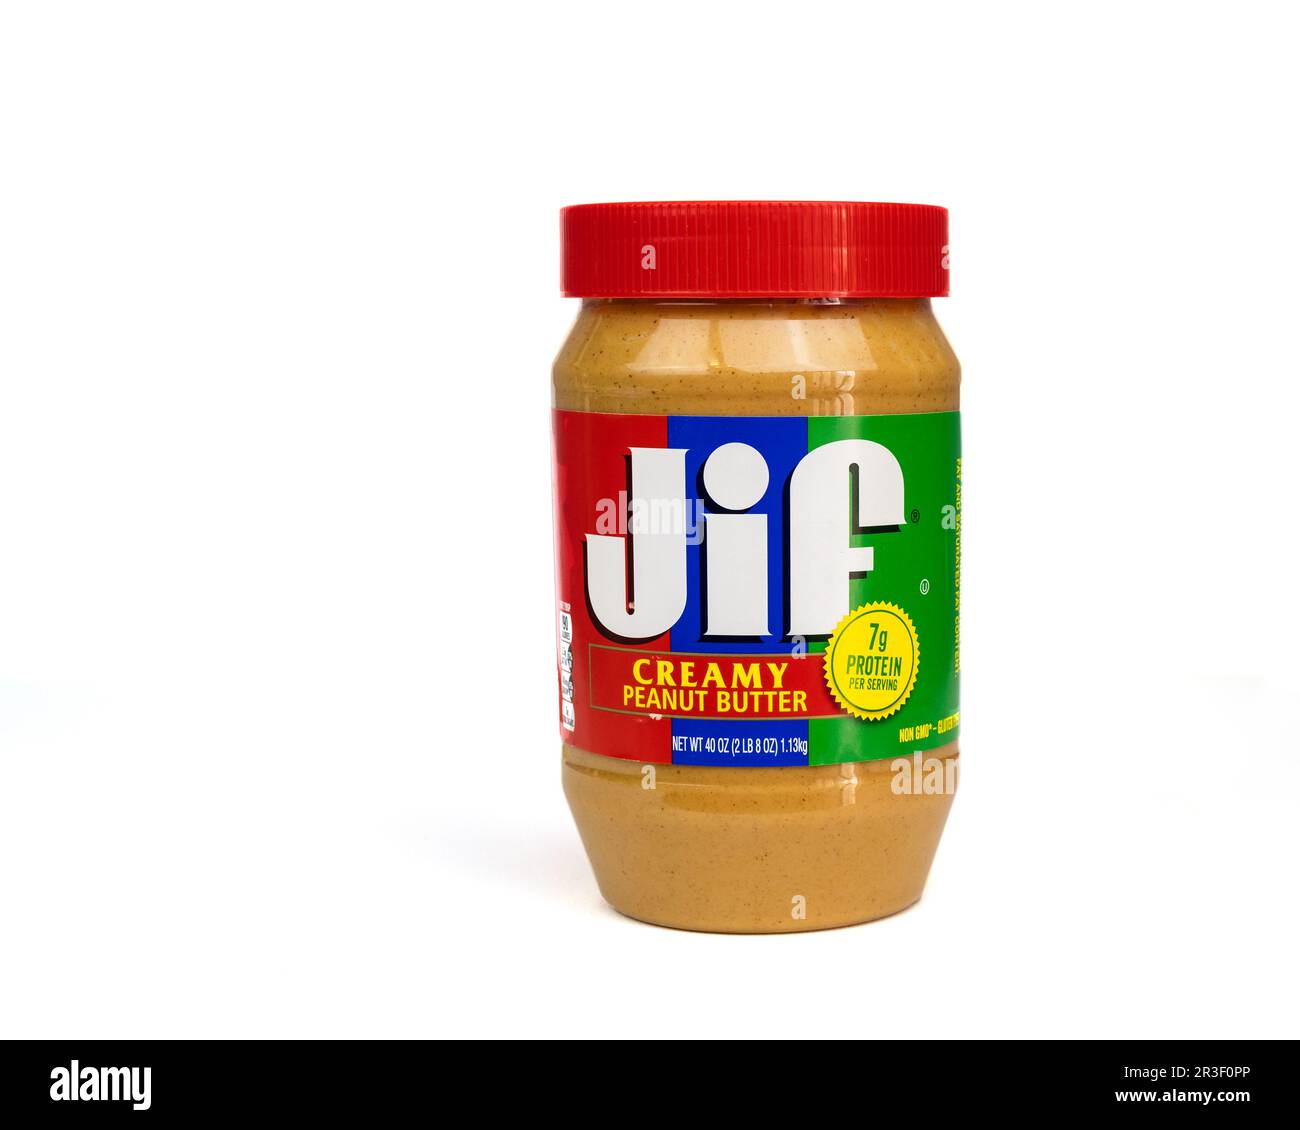 Jar of Jif brand creamy peanut butter on a white background, USA. Stock Photo